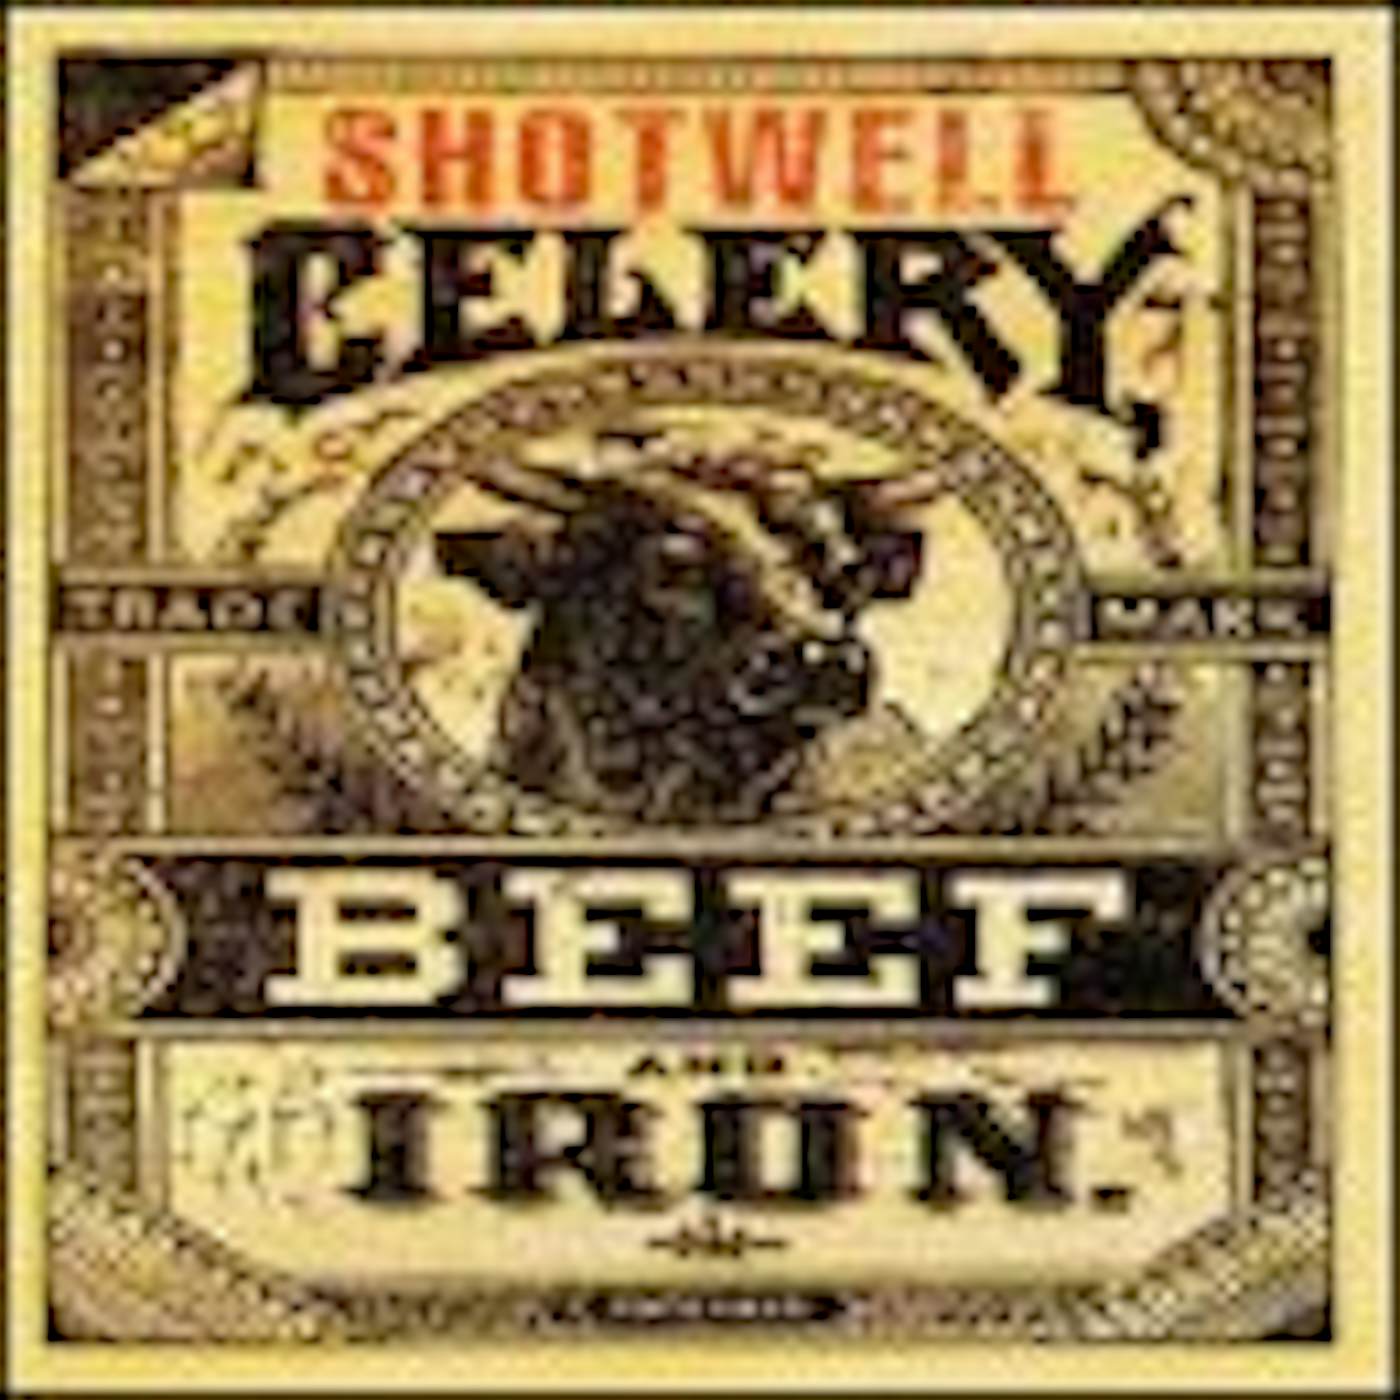 Shotwell CELERY BEEF & IRON CD